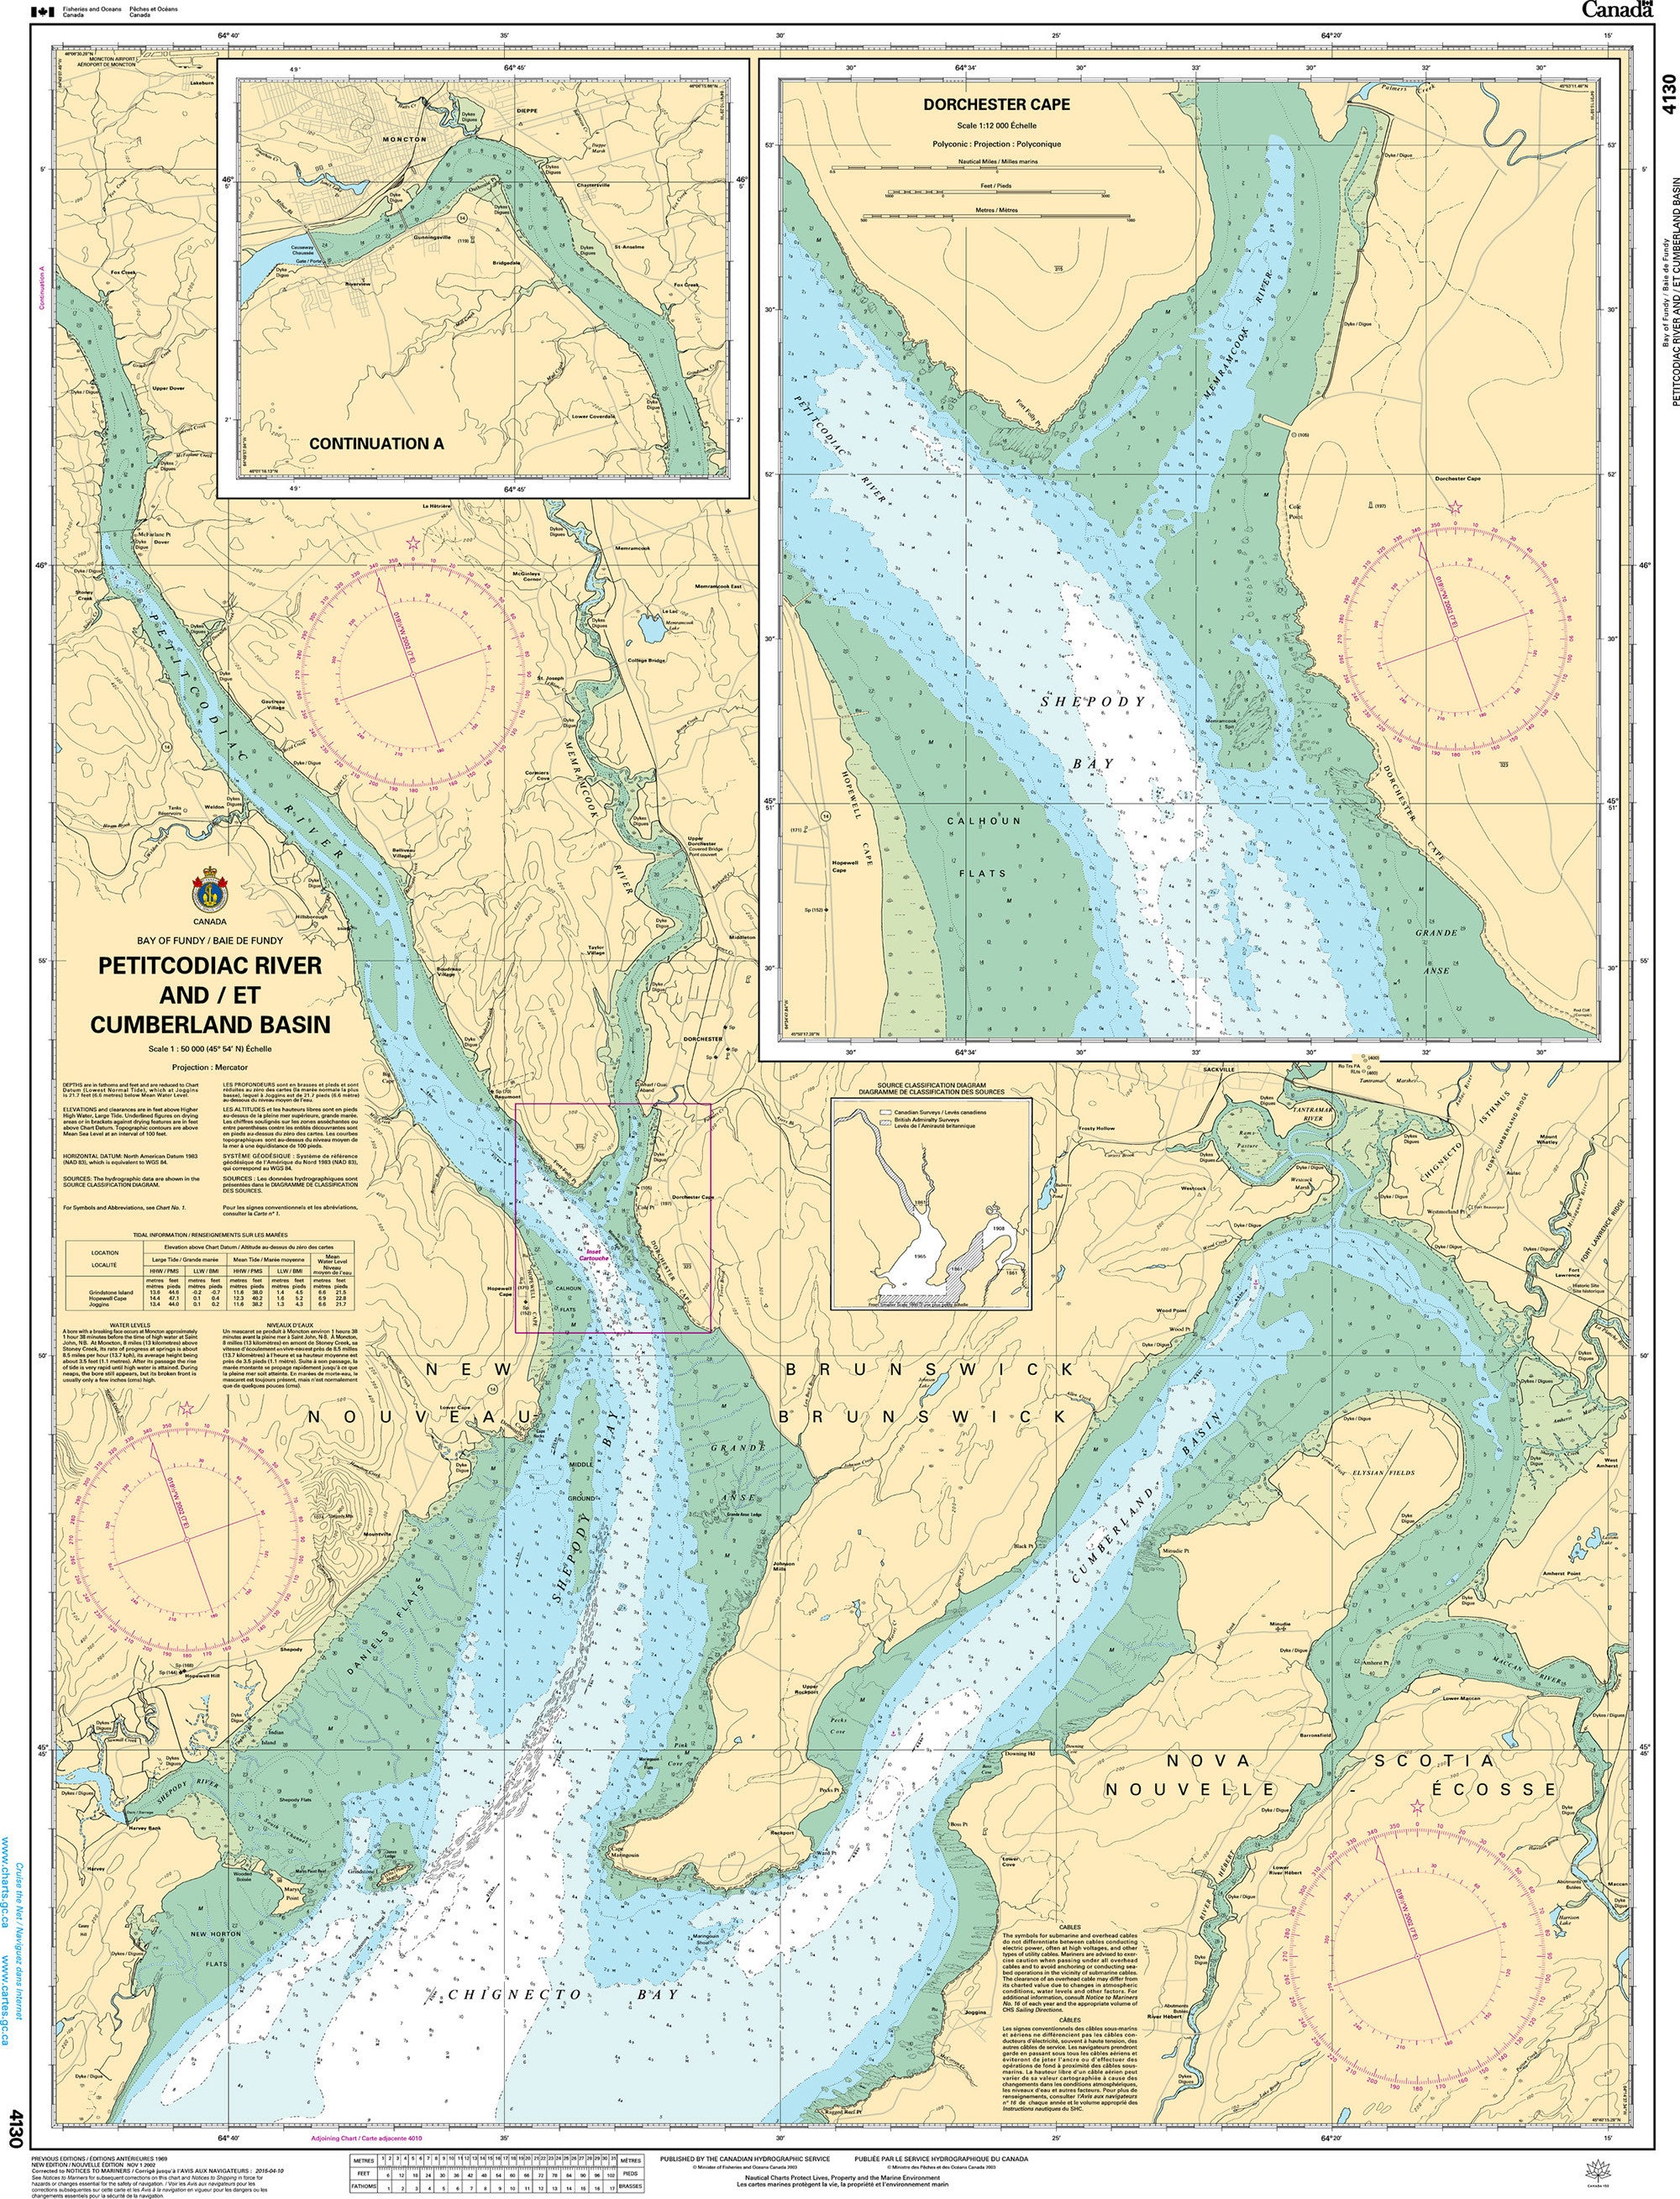 Canadian Hydrographic Service Nautical Chart CHS4130: Petitcodiac River and/et Cumberland Basin